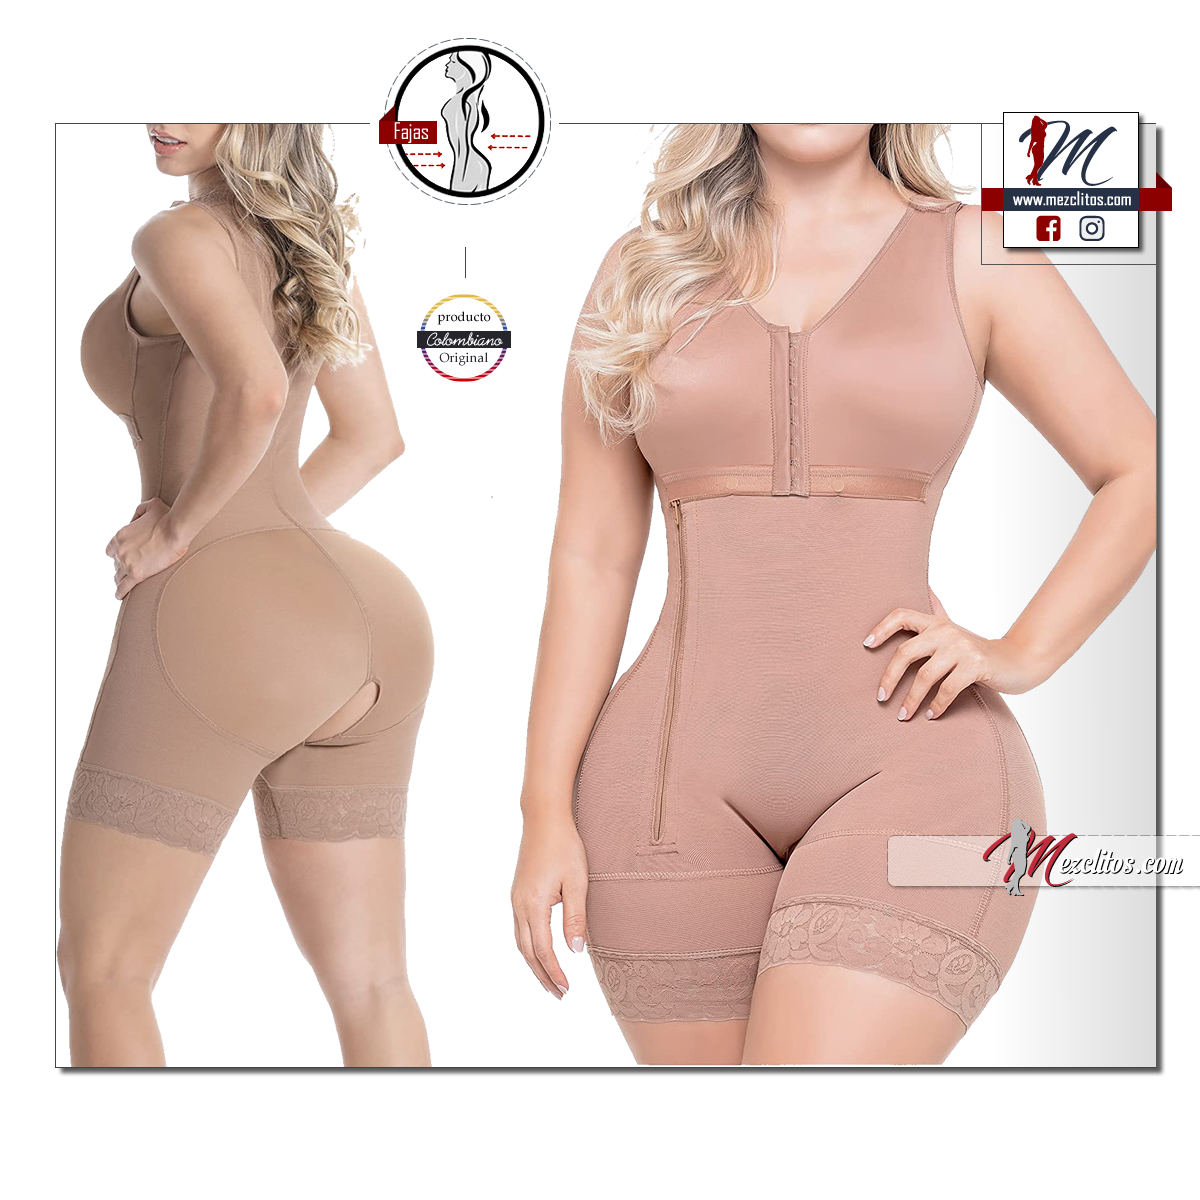 SONRYSE Sonryse 052 Full Body Shaper for Women Liposuction